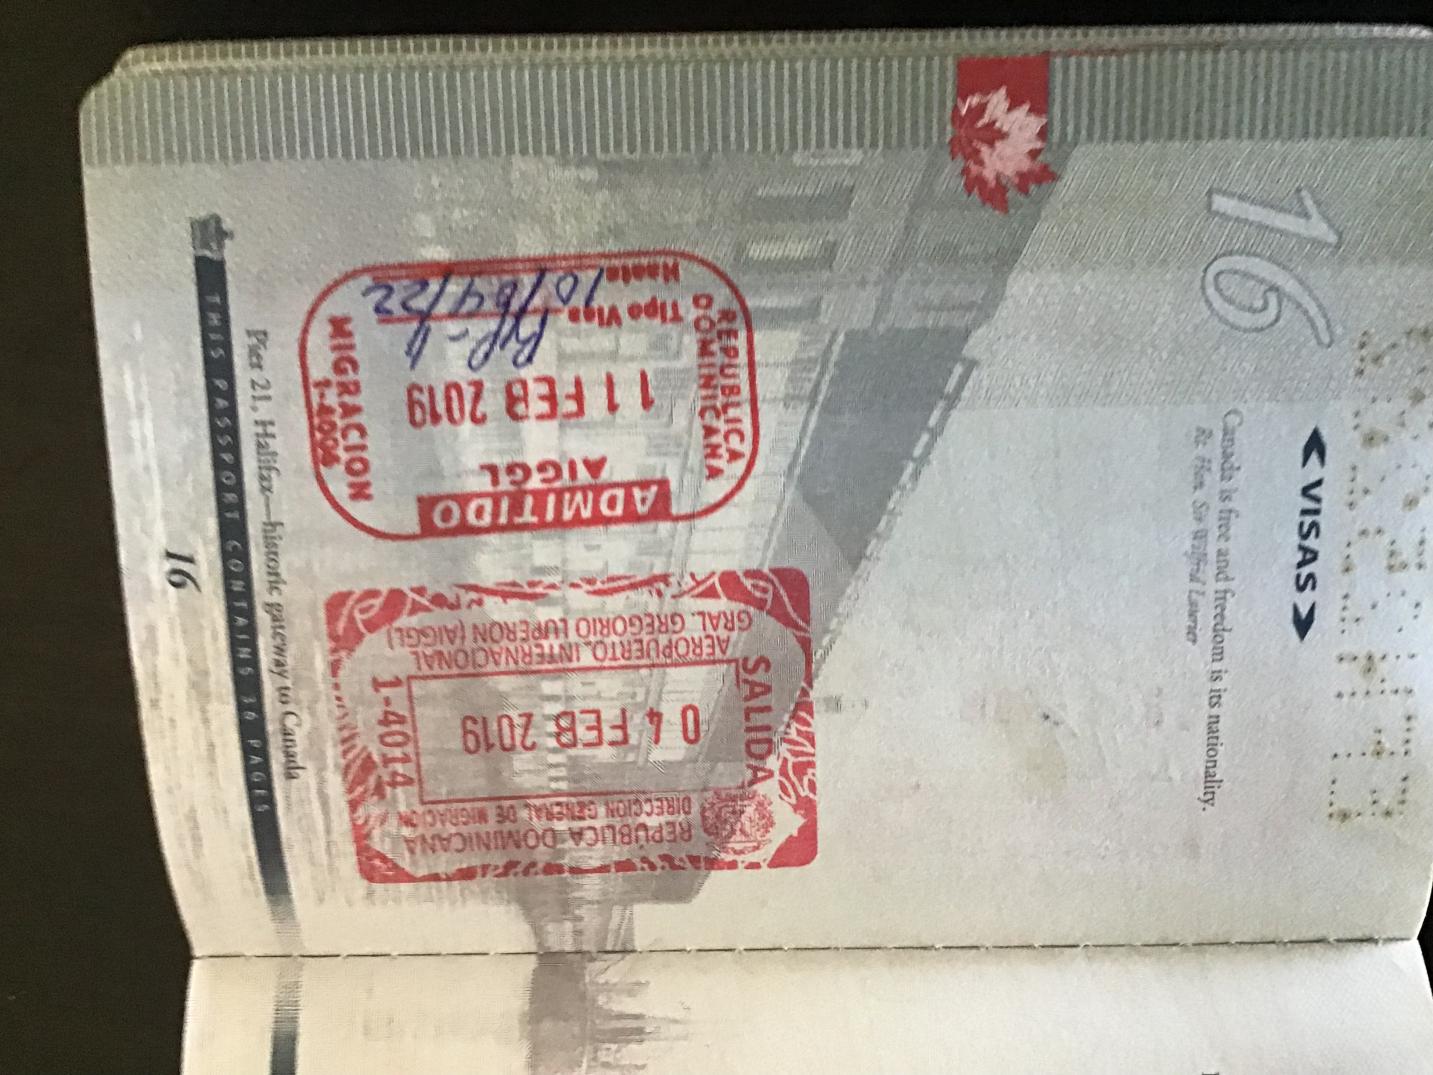 dominican republic passport stamp